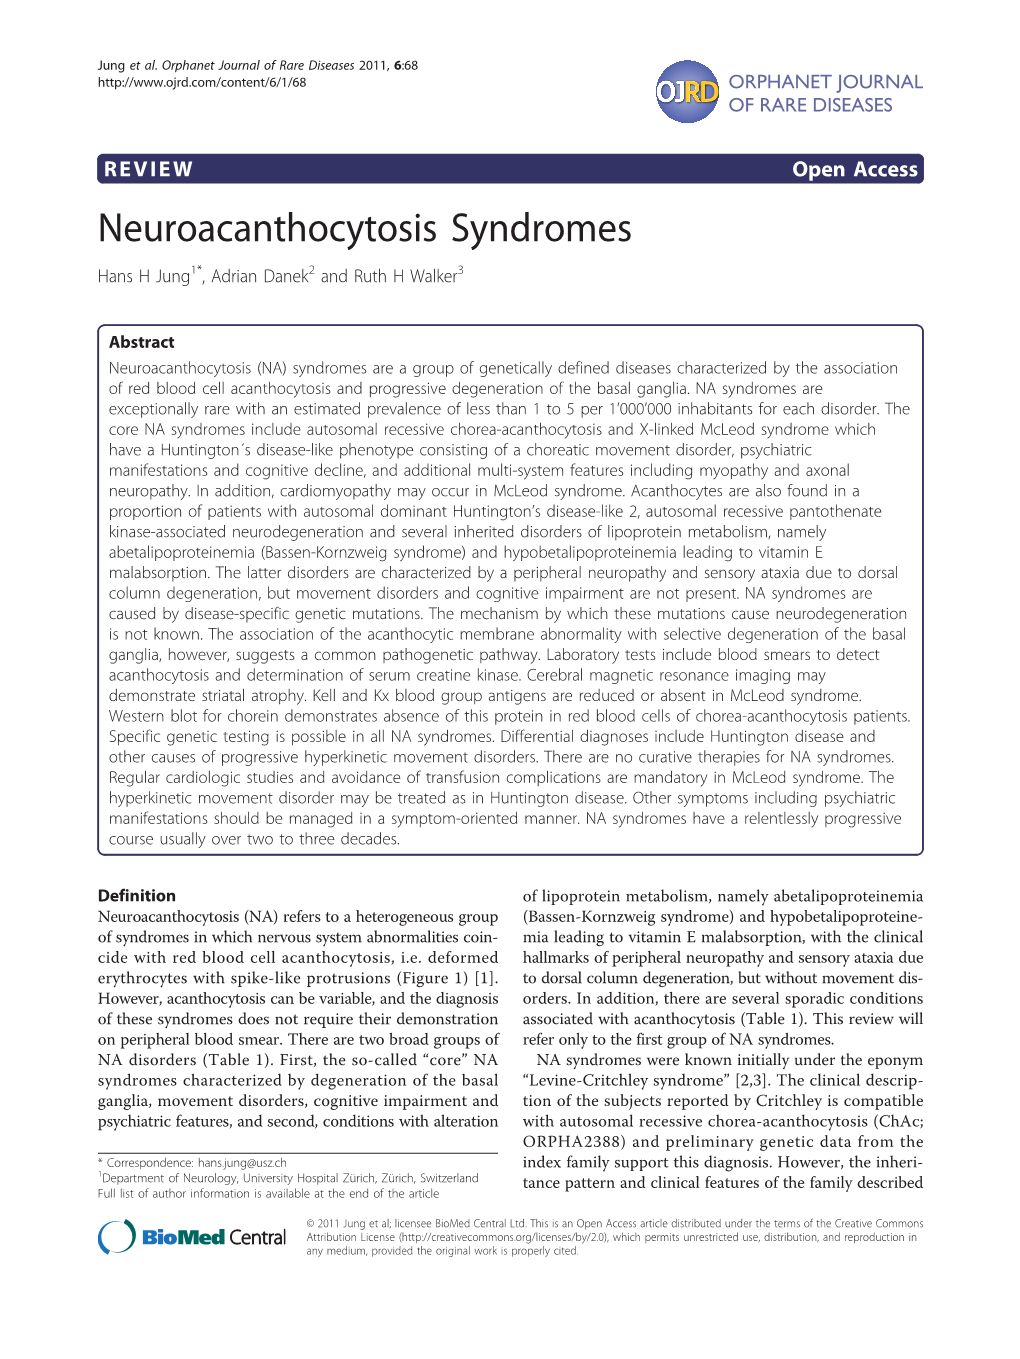 Neuroacanthocytosis Syndromes Hans H Jung1*, Adrian Danek2 and Ruth H Walker3